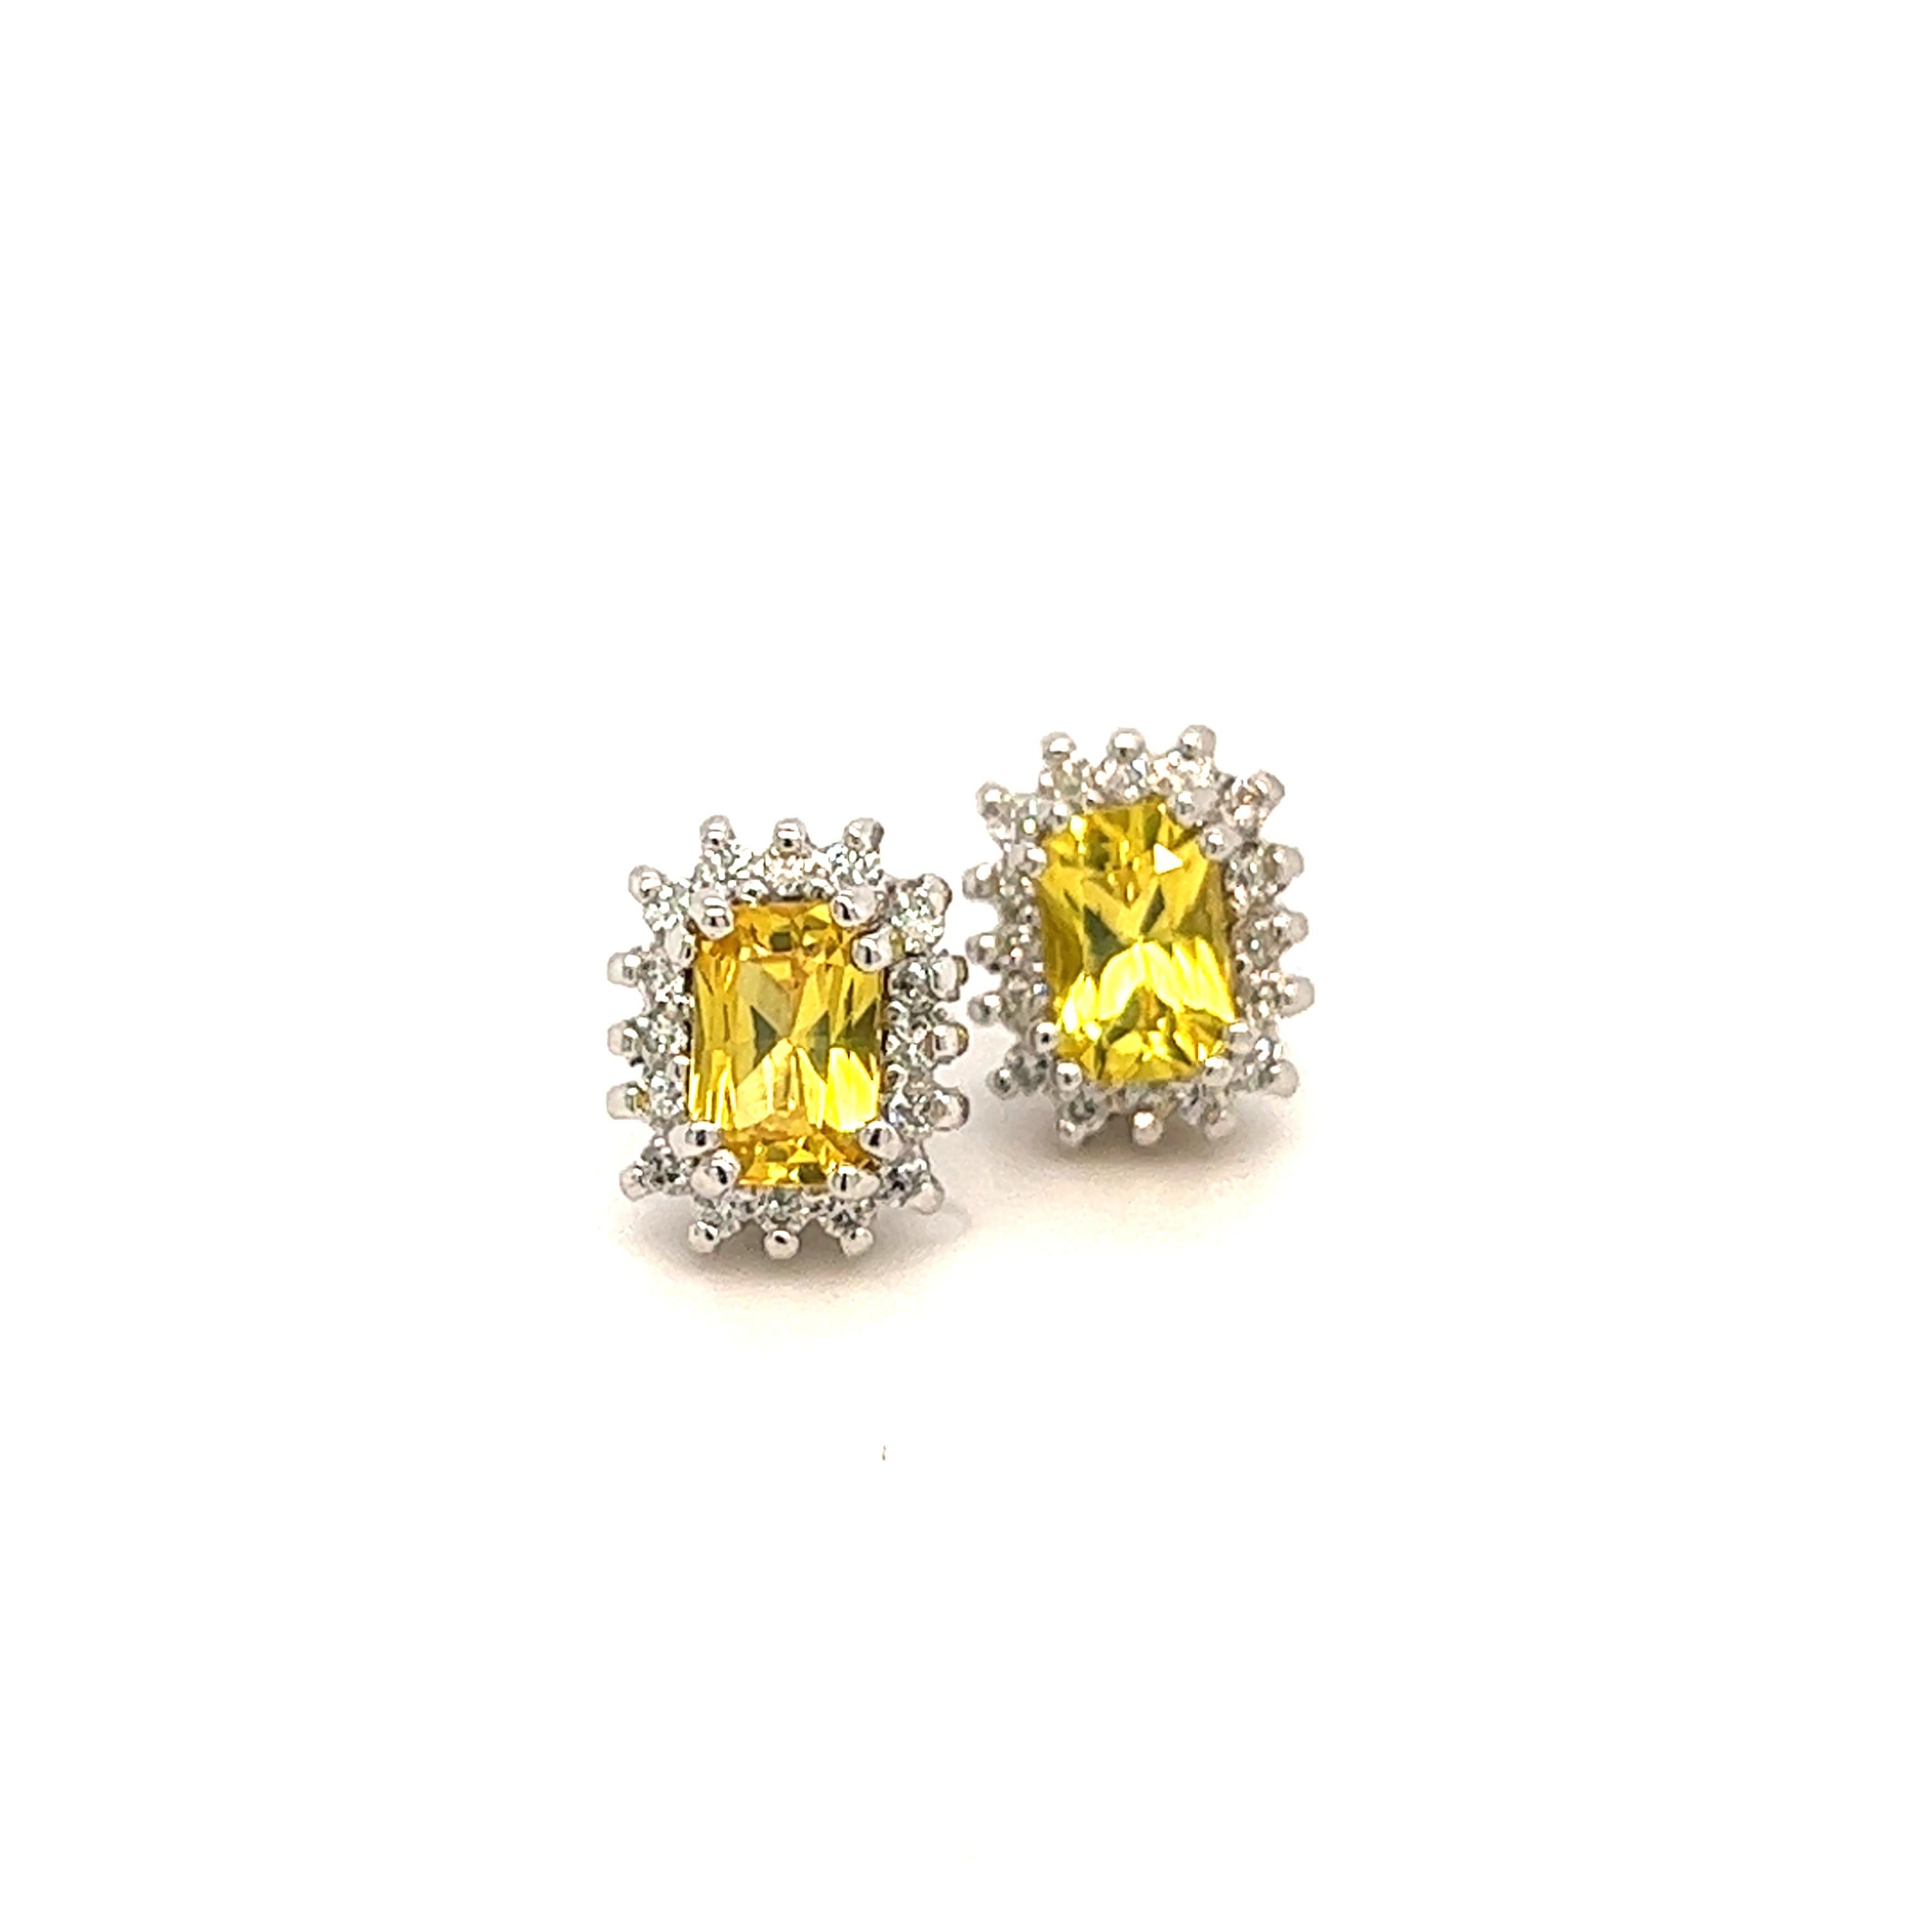 Natural Sapphire Diamond Stud Earrings 14k W Gold 1.71 TCW Certified For Sale 2